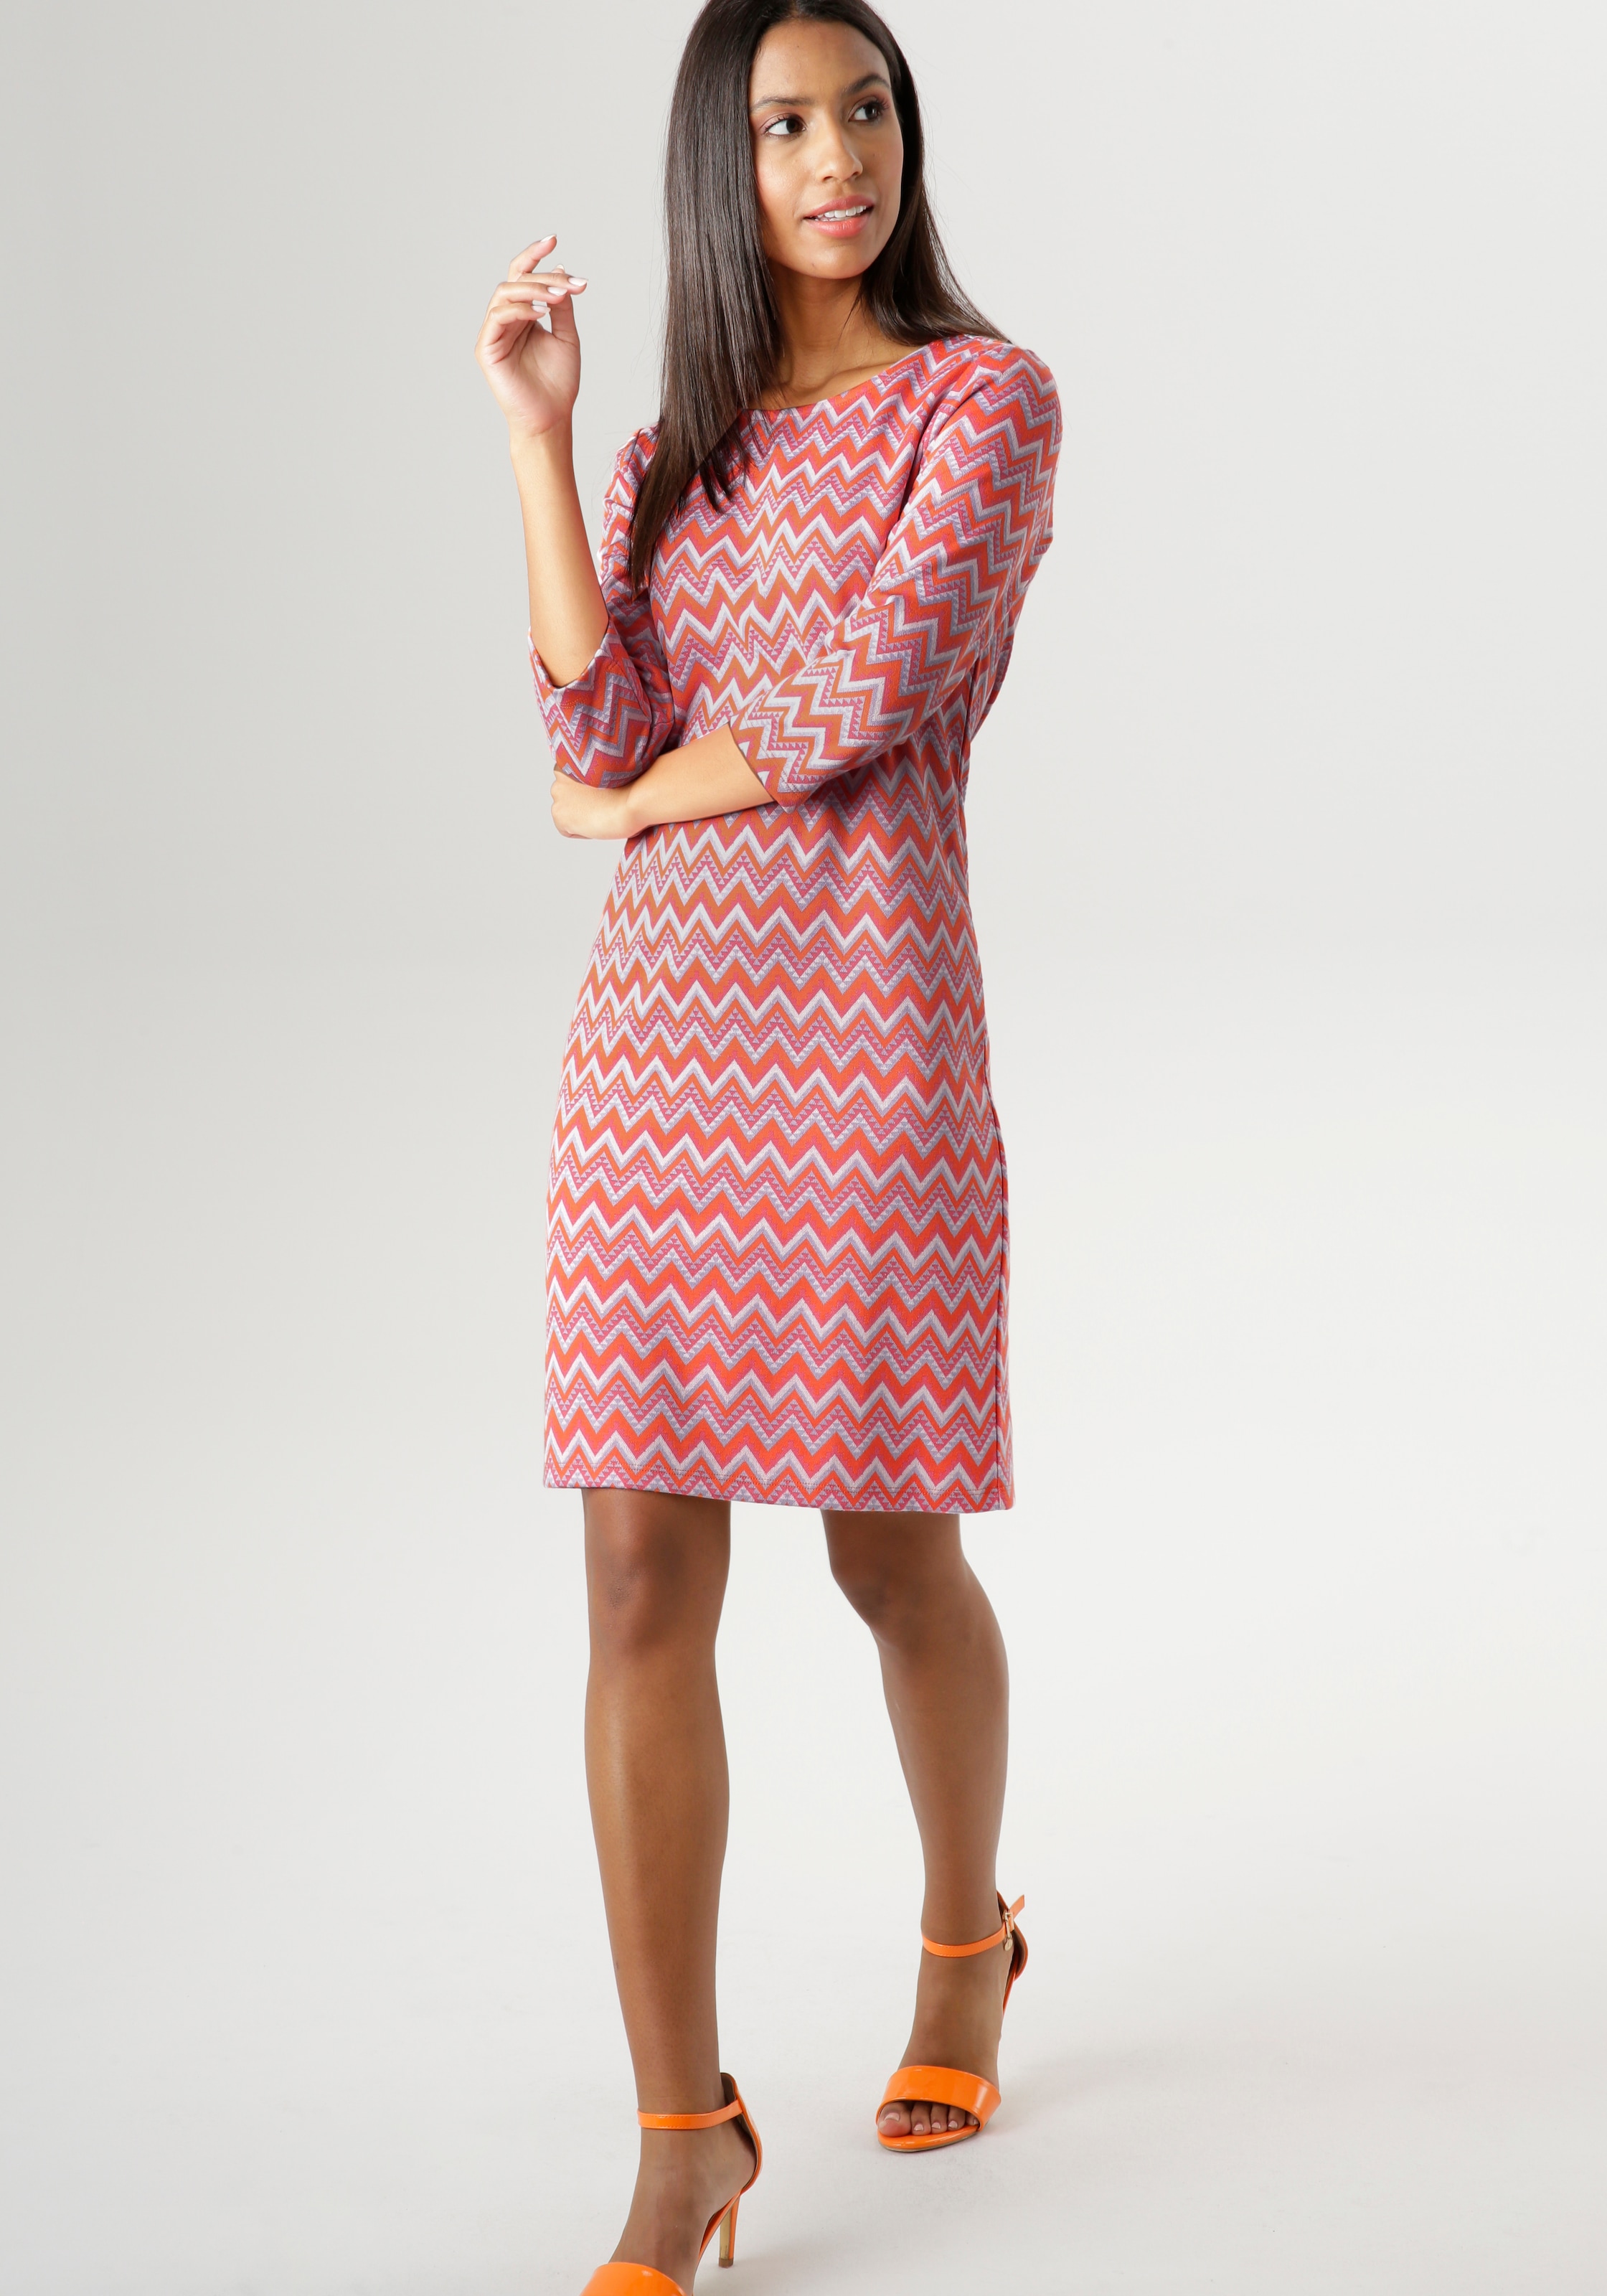 Aniston SELECTED Jerseykleid, mit buntem Ethno-Muster - NEUE KOLLEKTION  bestellen bei OTTO